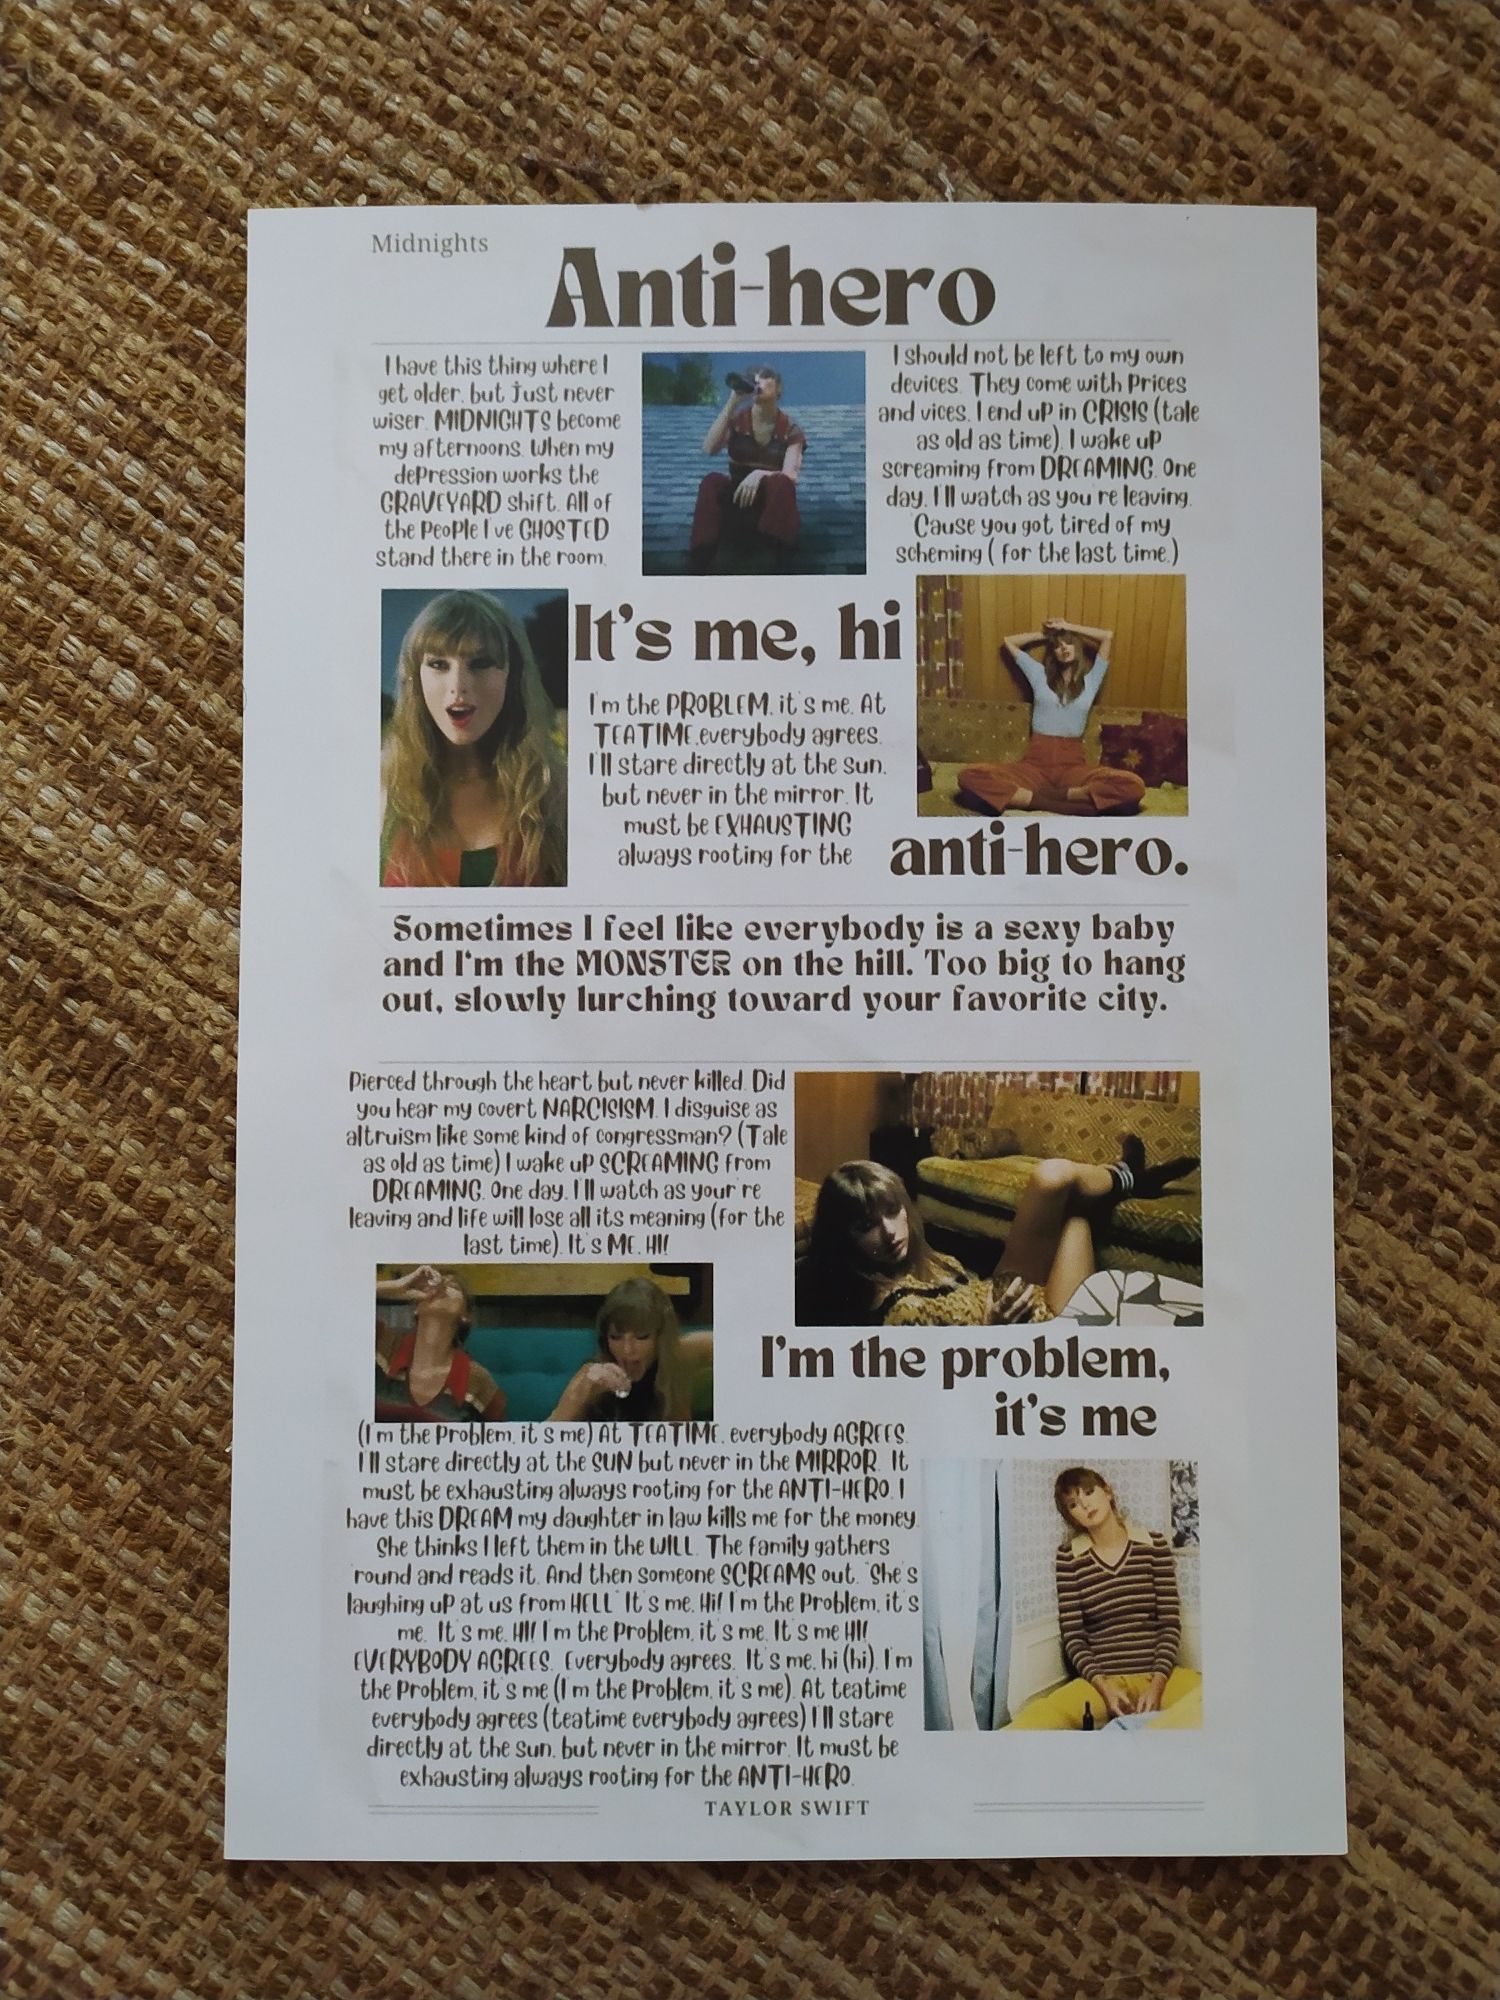 Taylor Swift Anti-hero lyrics poster